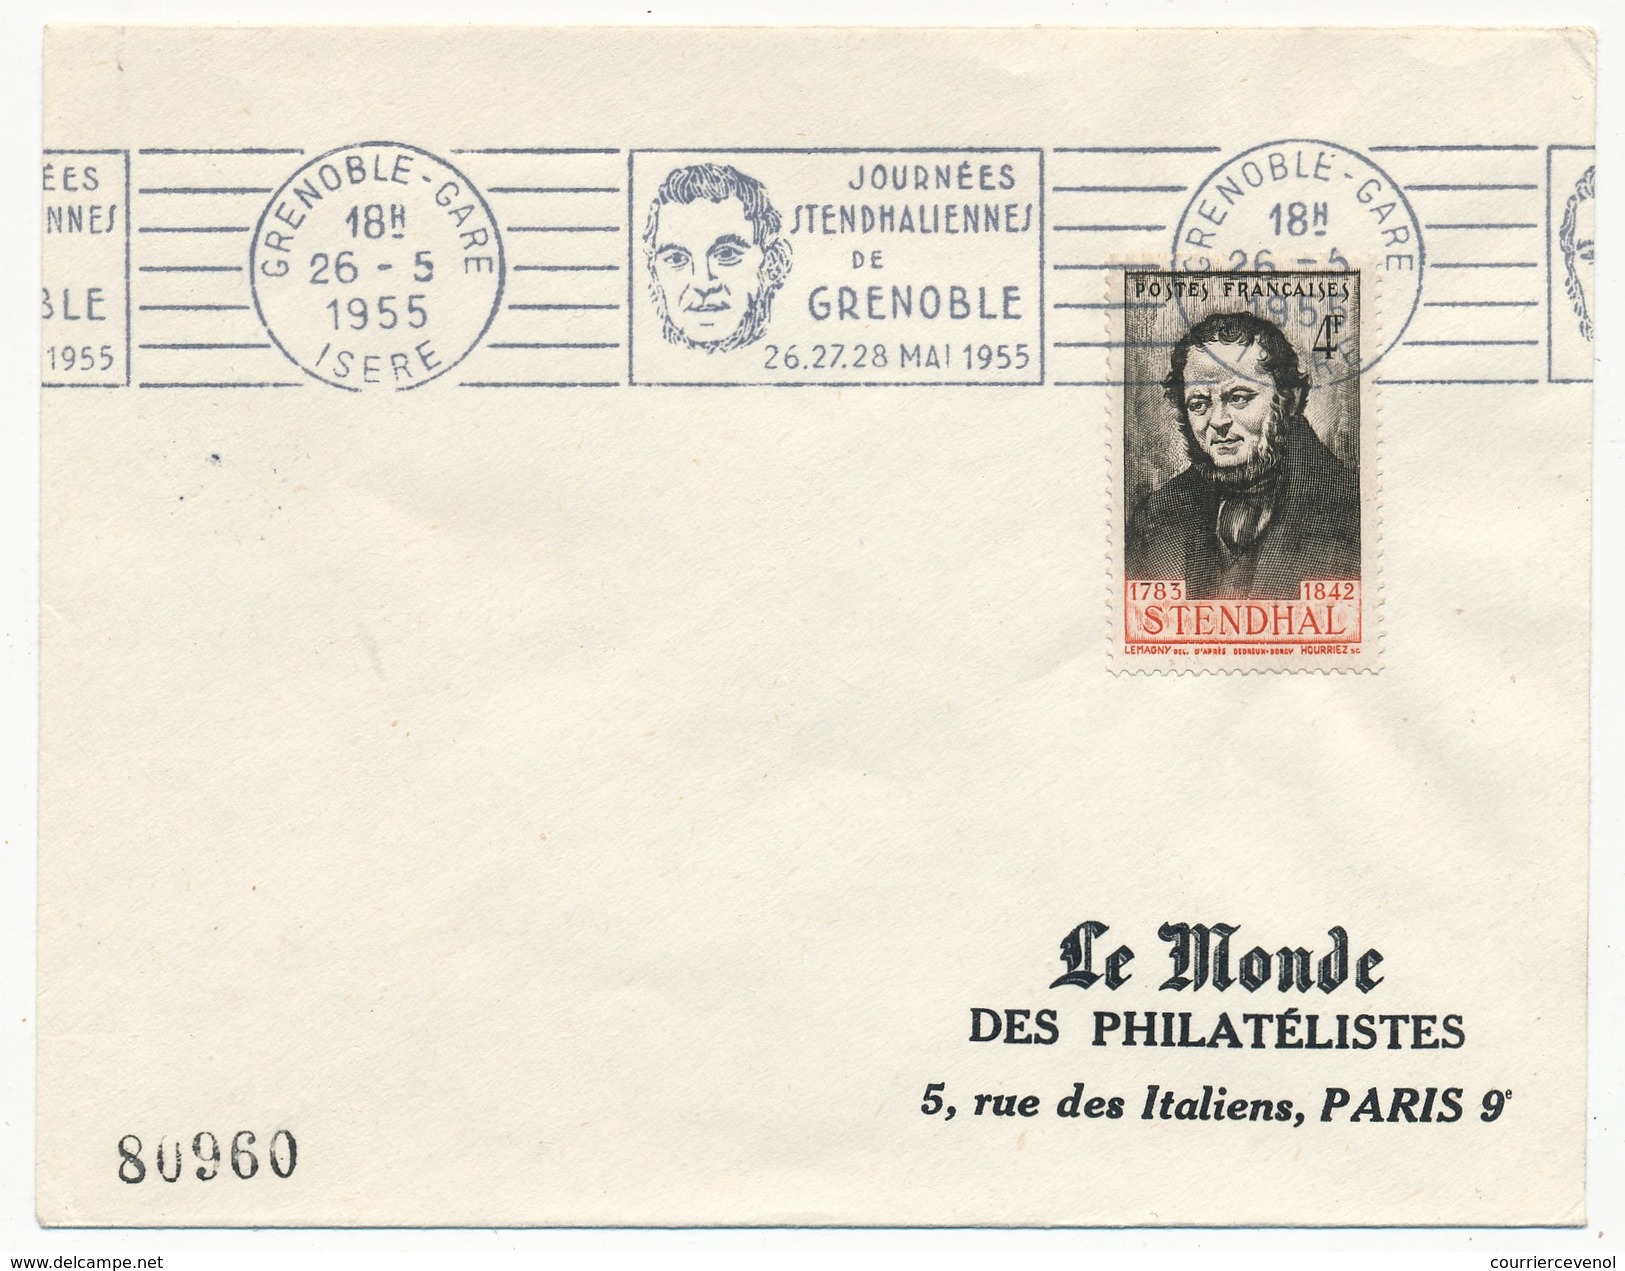 FRANCE - Enveloppe - OMEC "Journées Stendhaliennes" GRENOBLE 26 Mai 1955 - Escritores